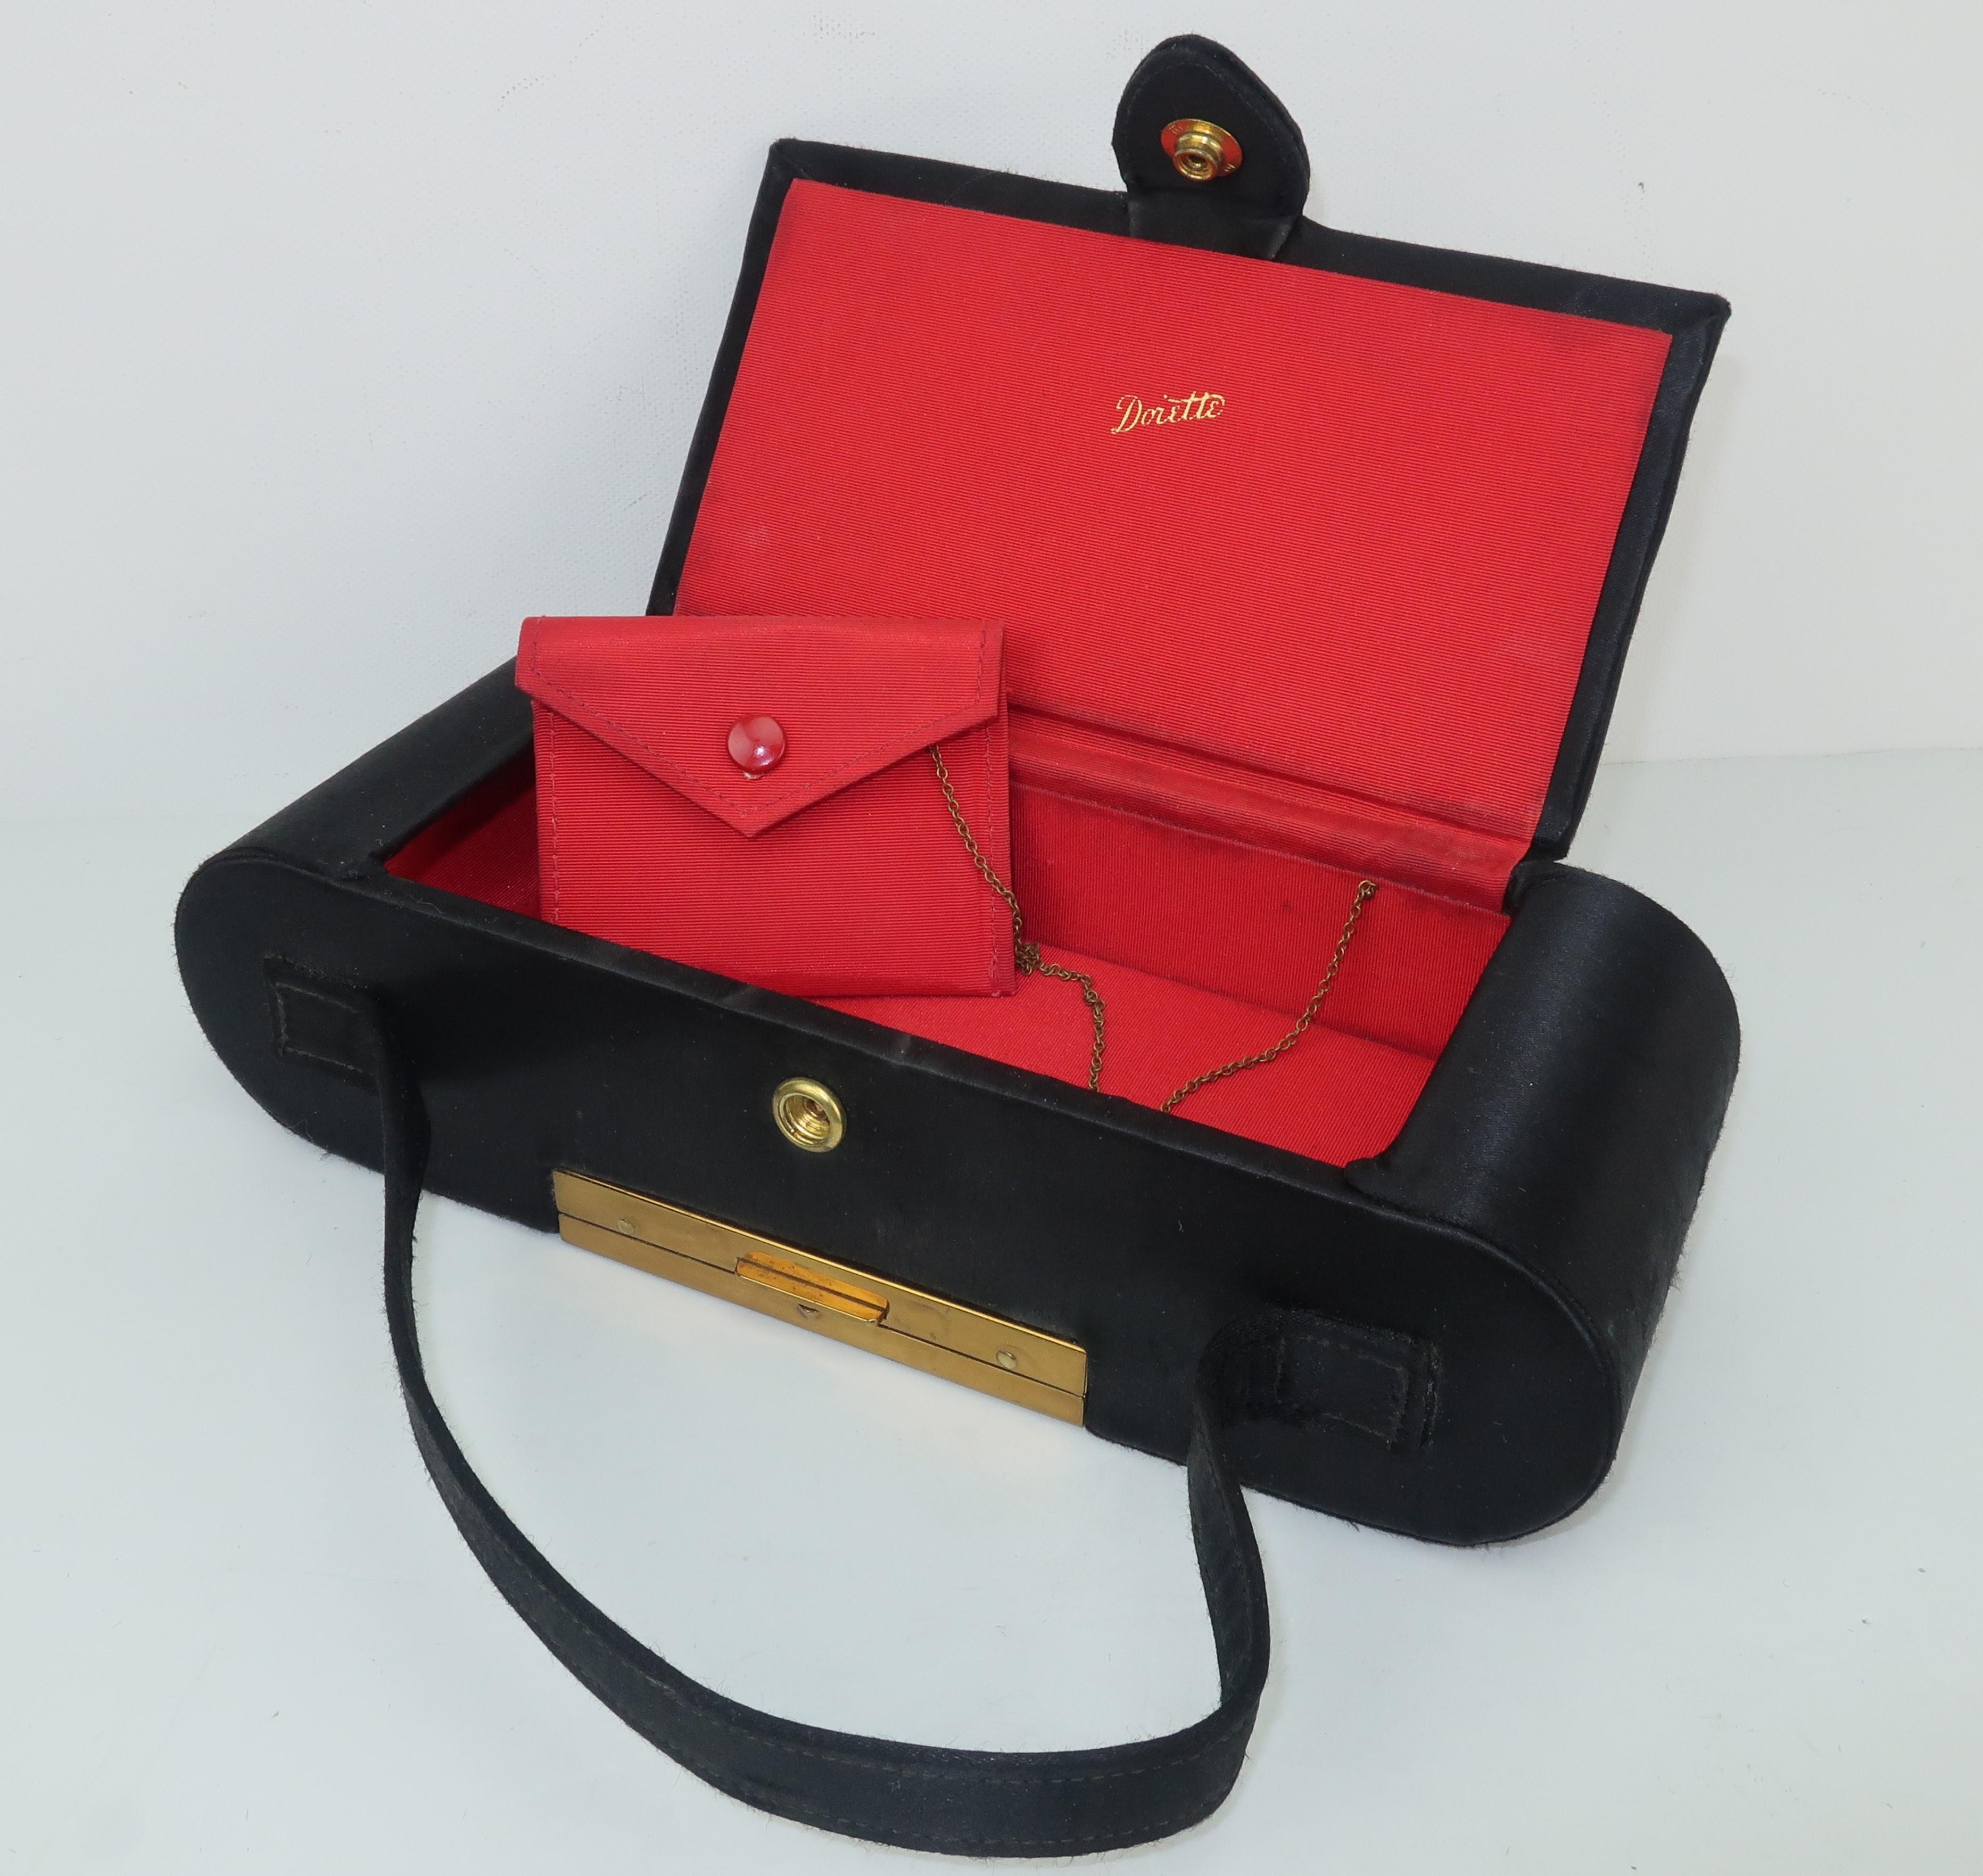 1950's Dorette Mirrored Compact Black Satin Evening Handbag 5